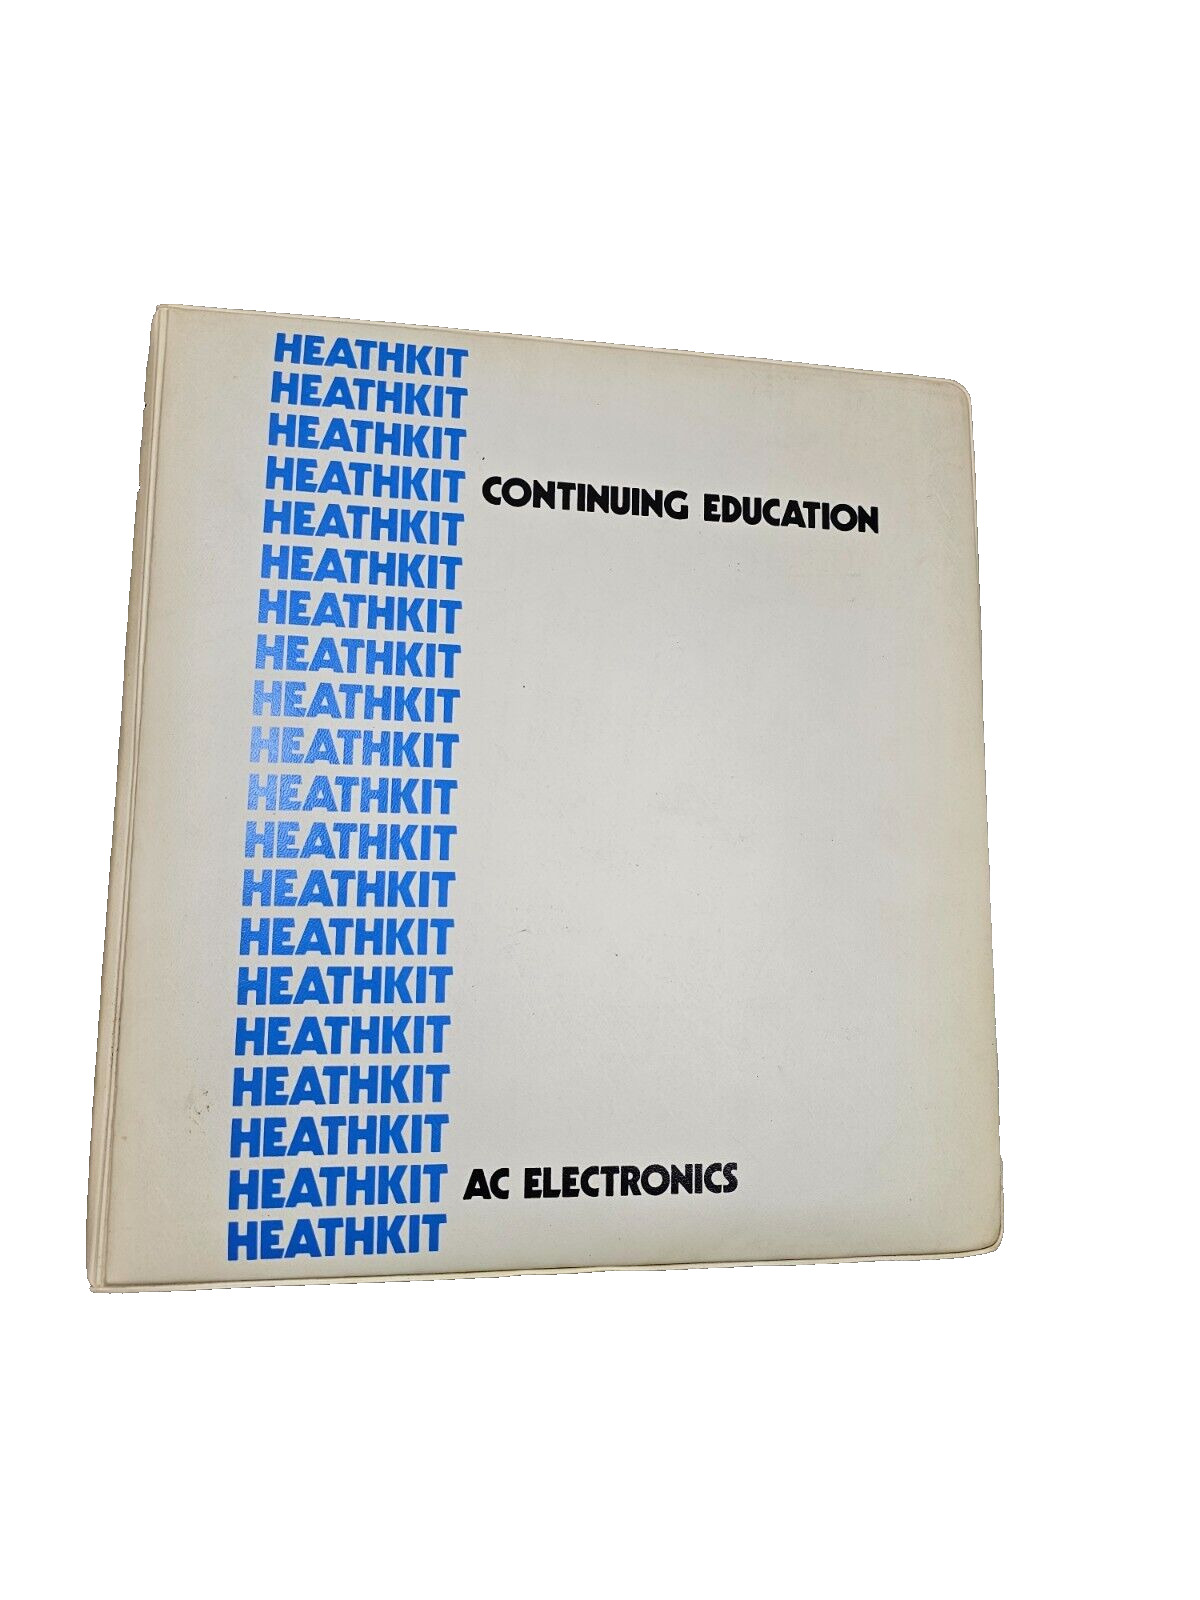 Vintage Heathkit Continuing Education Binder